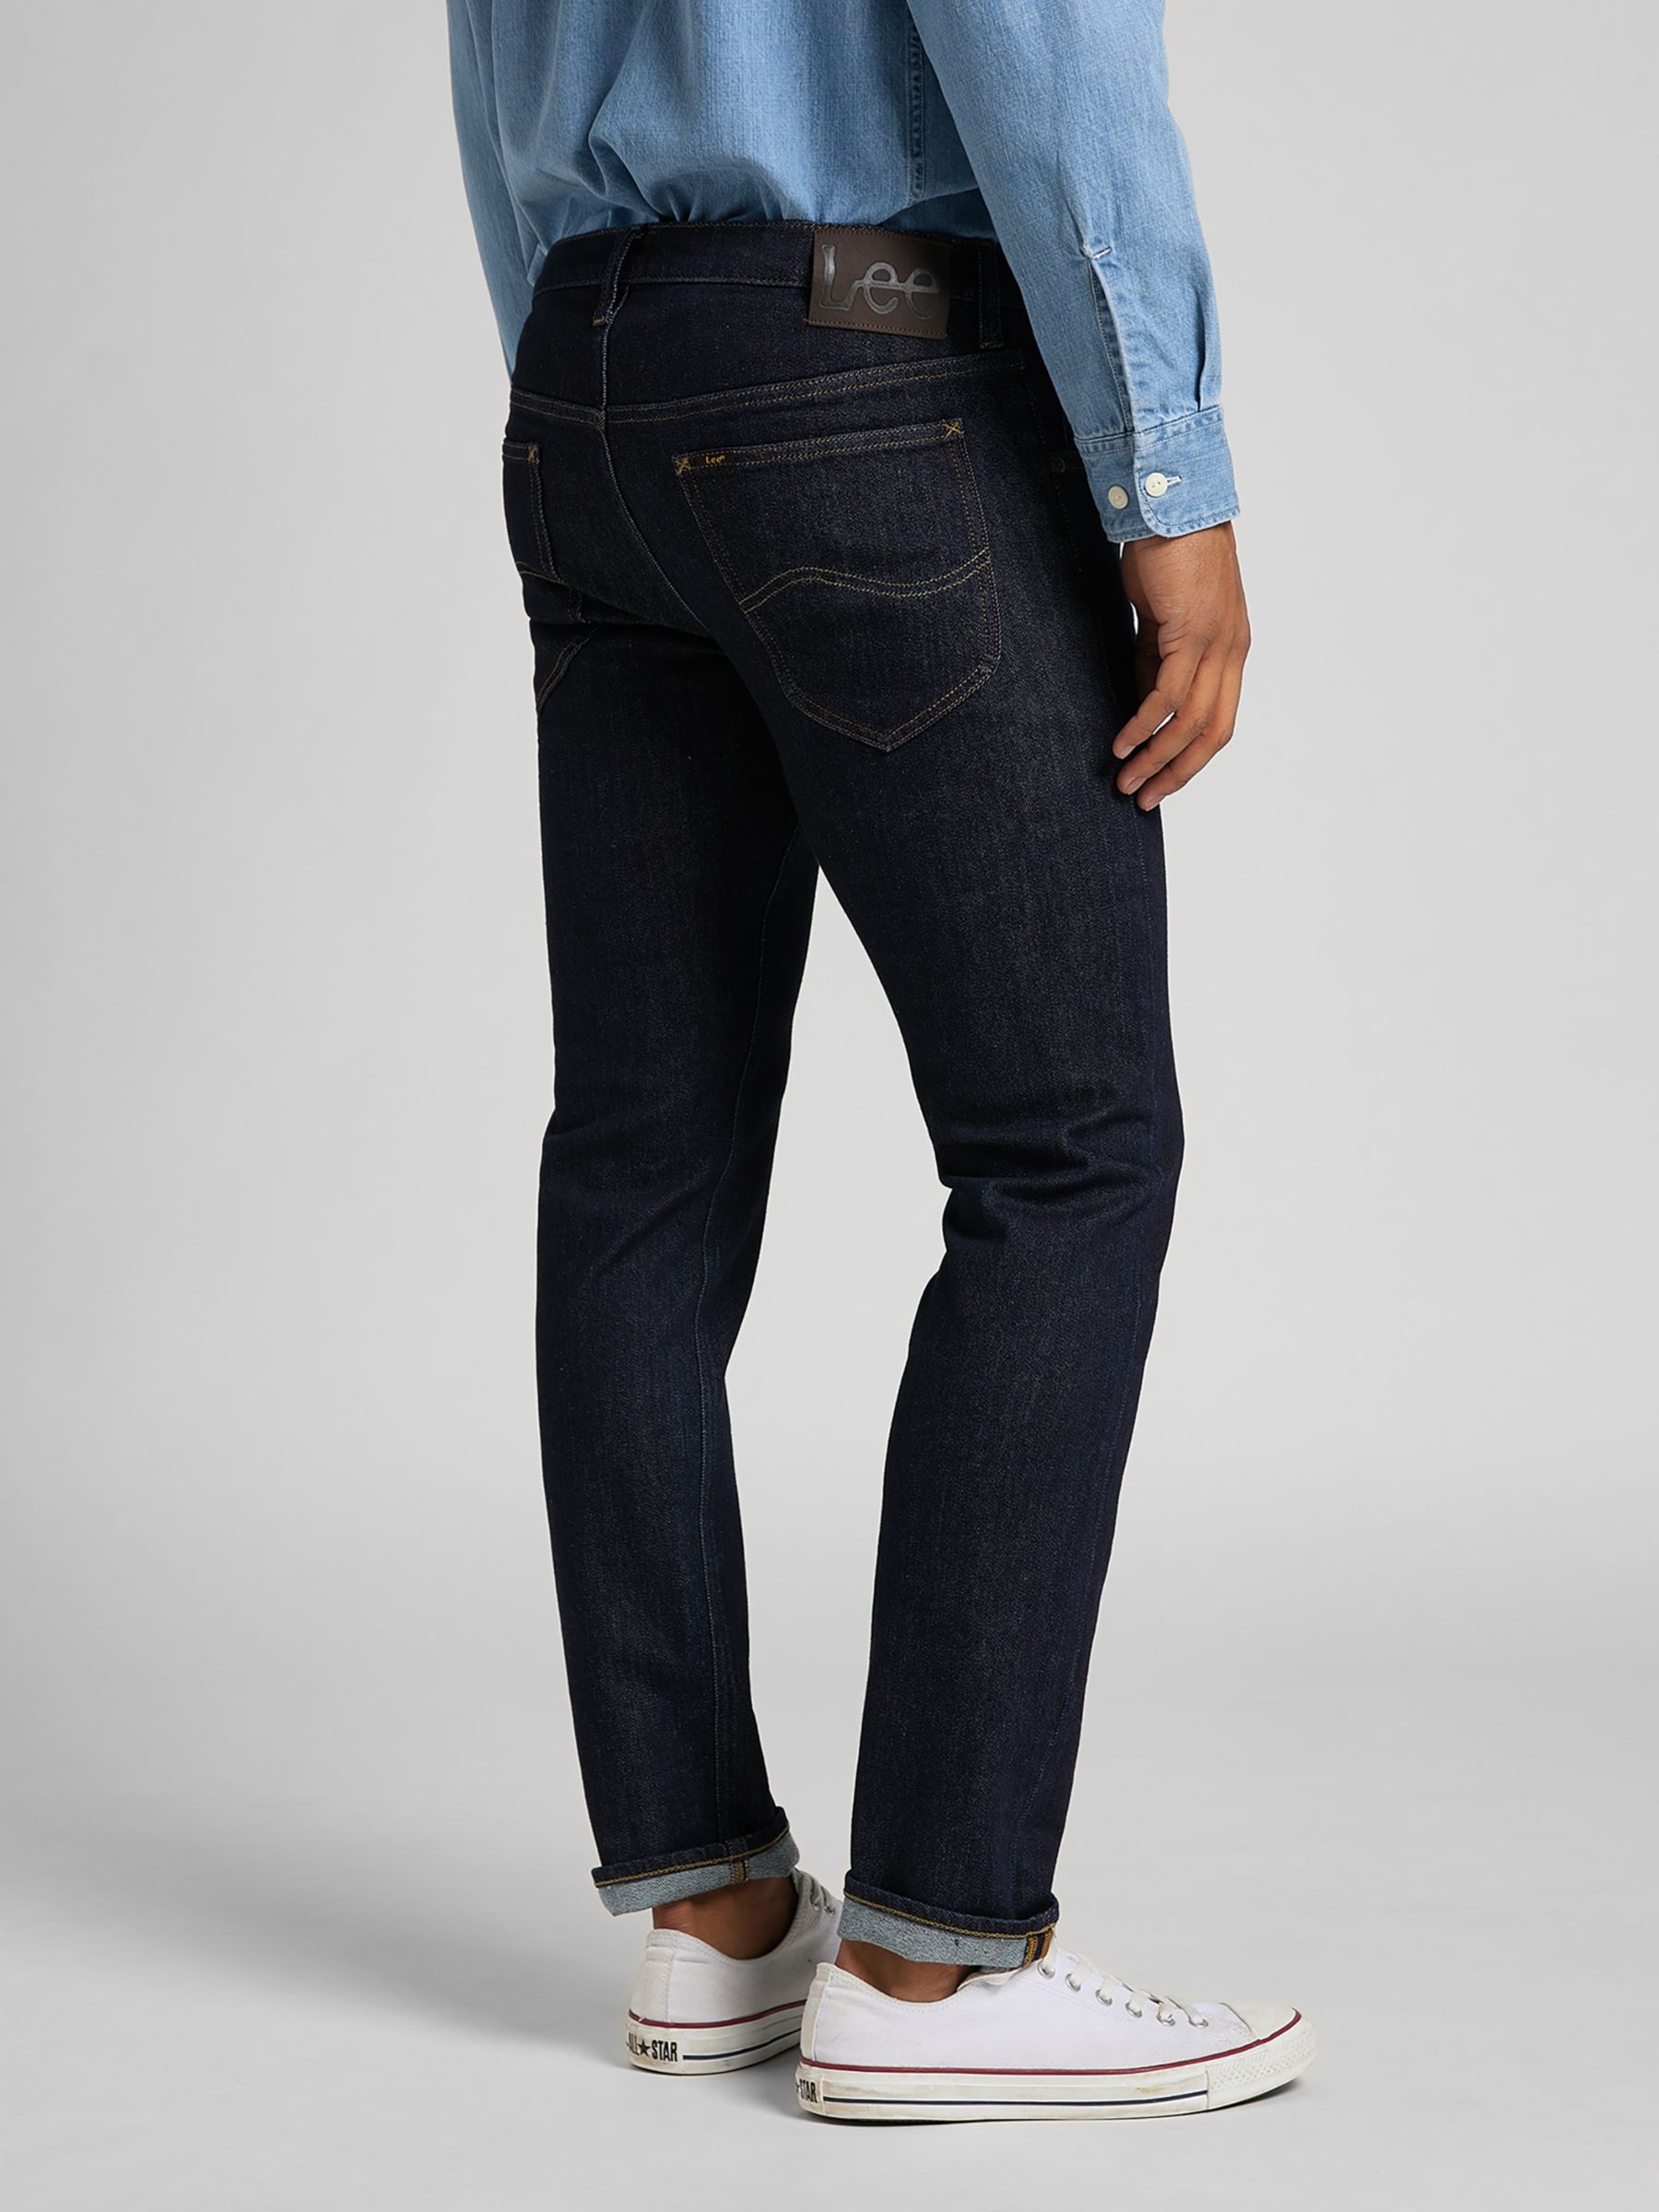 Lee Rider Slim Fit Denim Jeans, Mid Stone at John Lewis & Partners